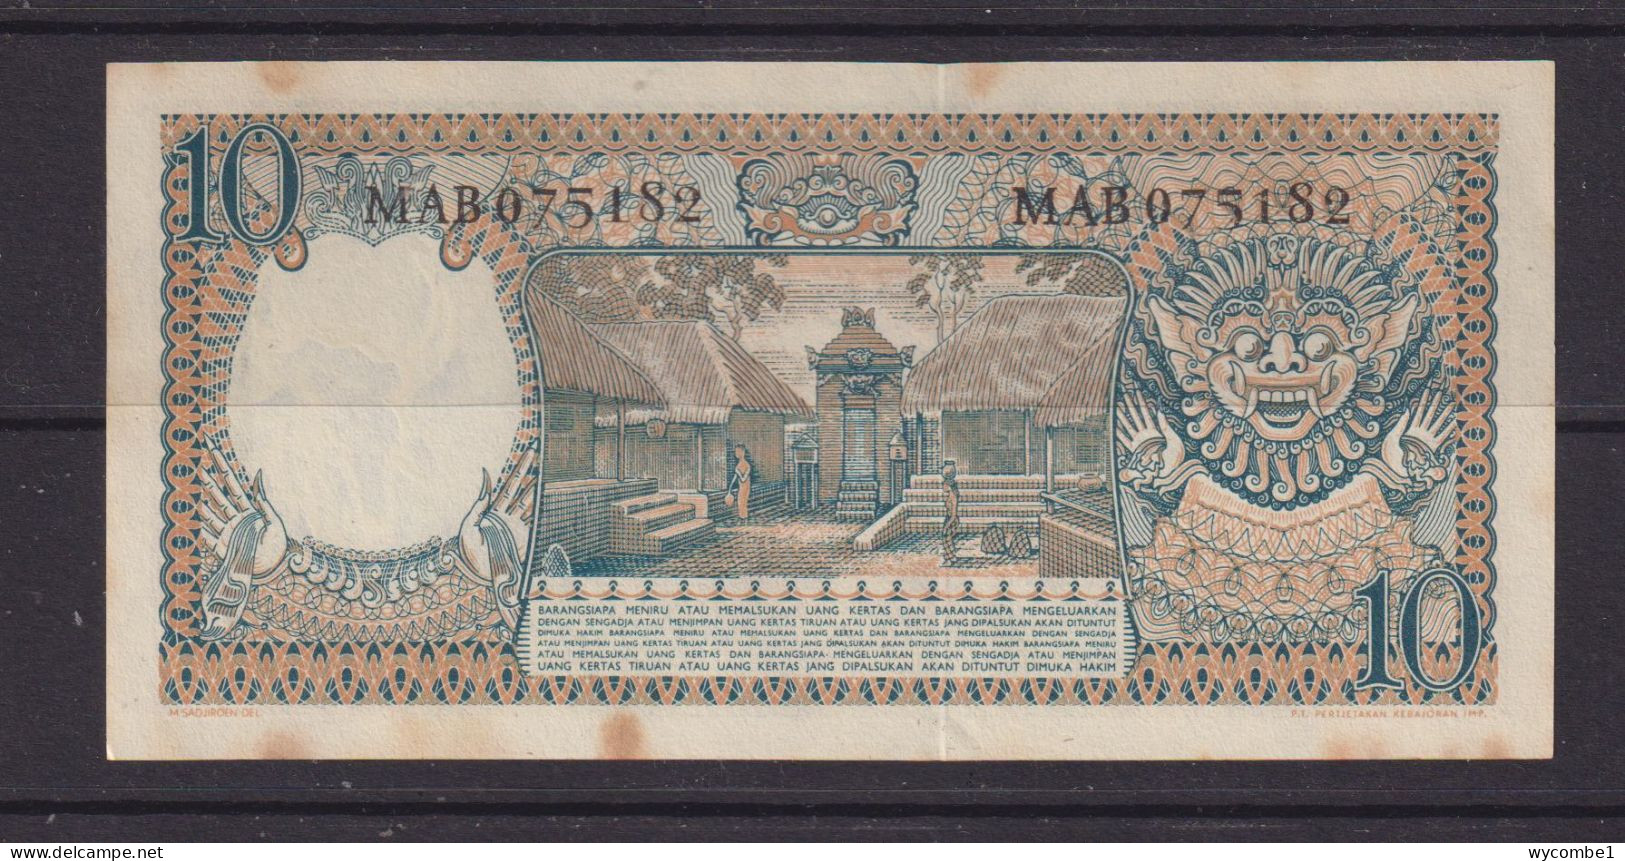 INDONESIA - 1958 10 Rupiah Circulated Banknote - Indonesië